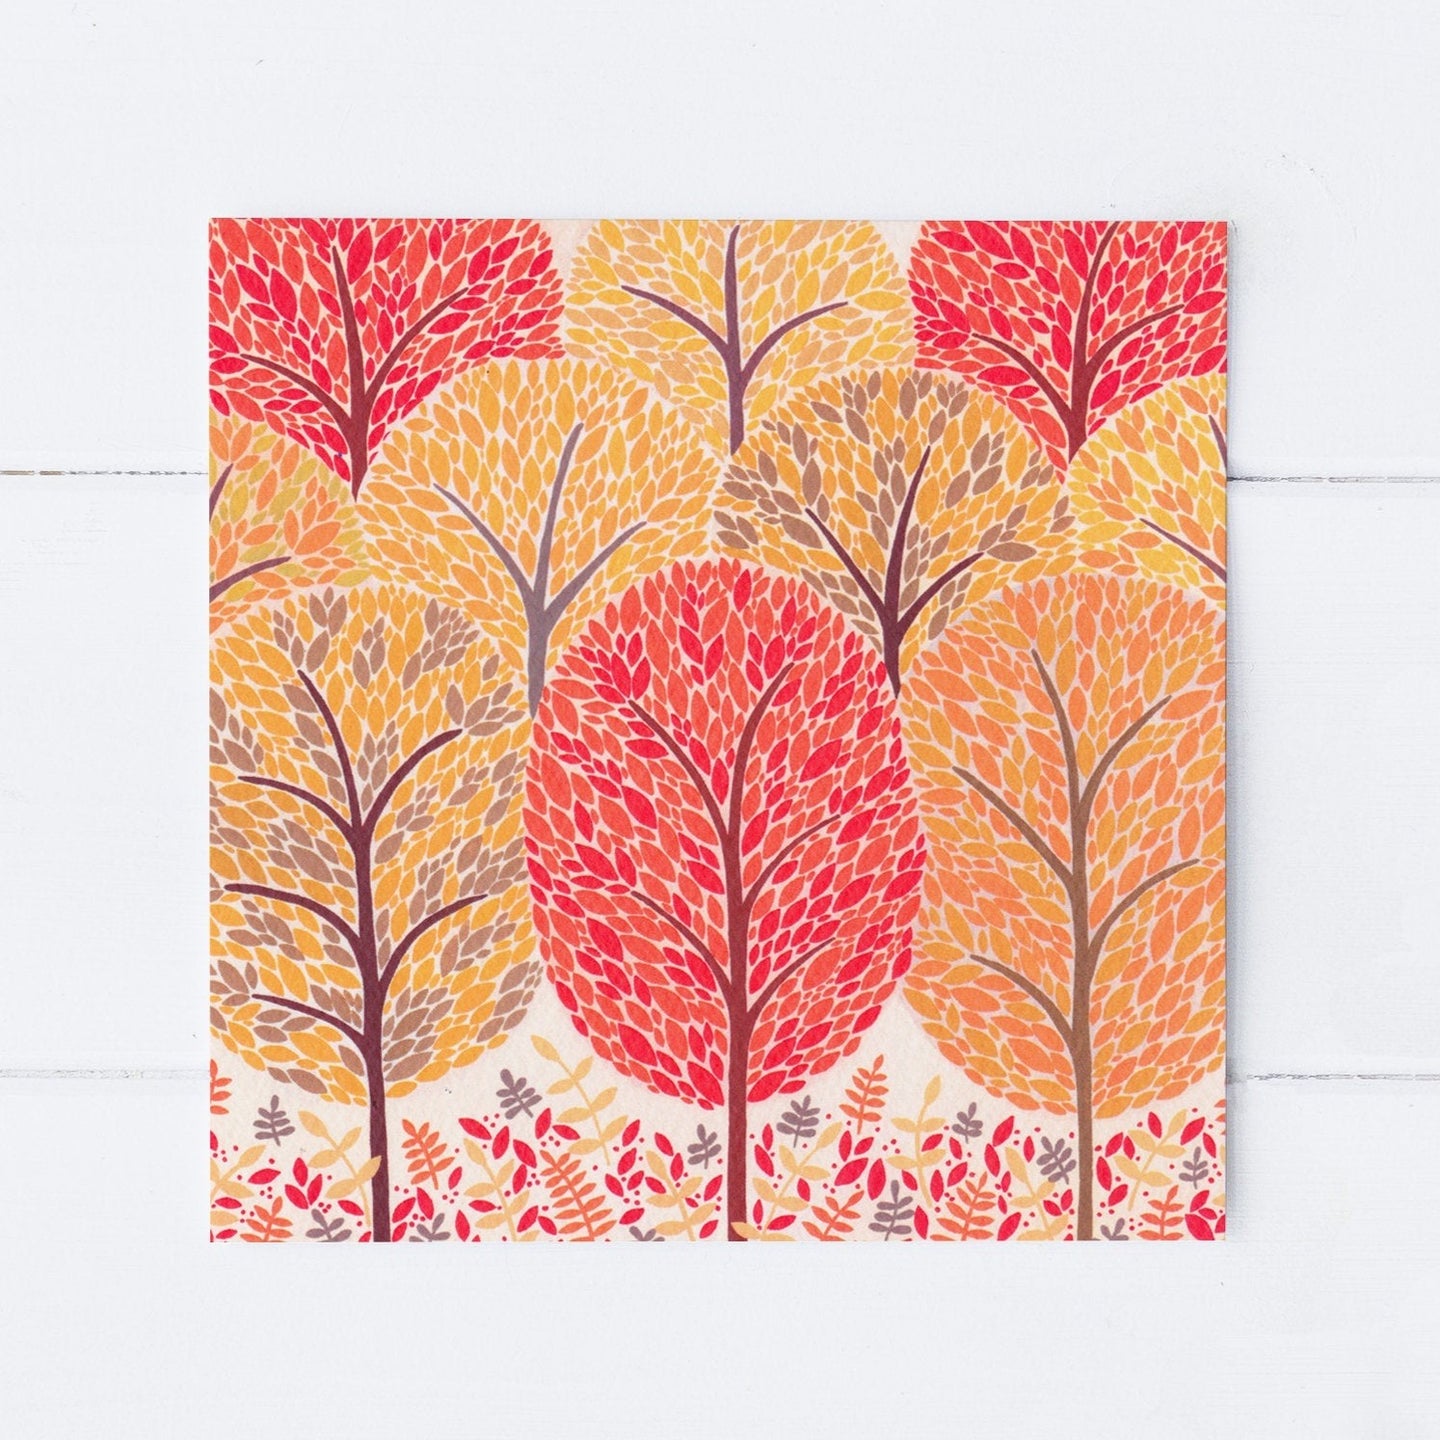 Autumn Trees Greeting Card